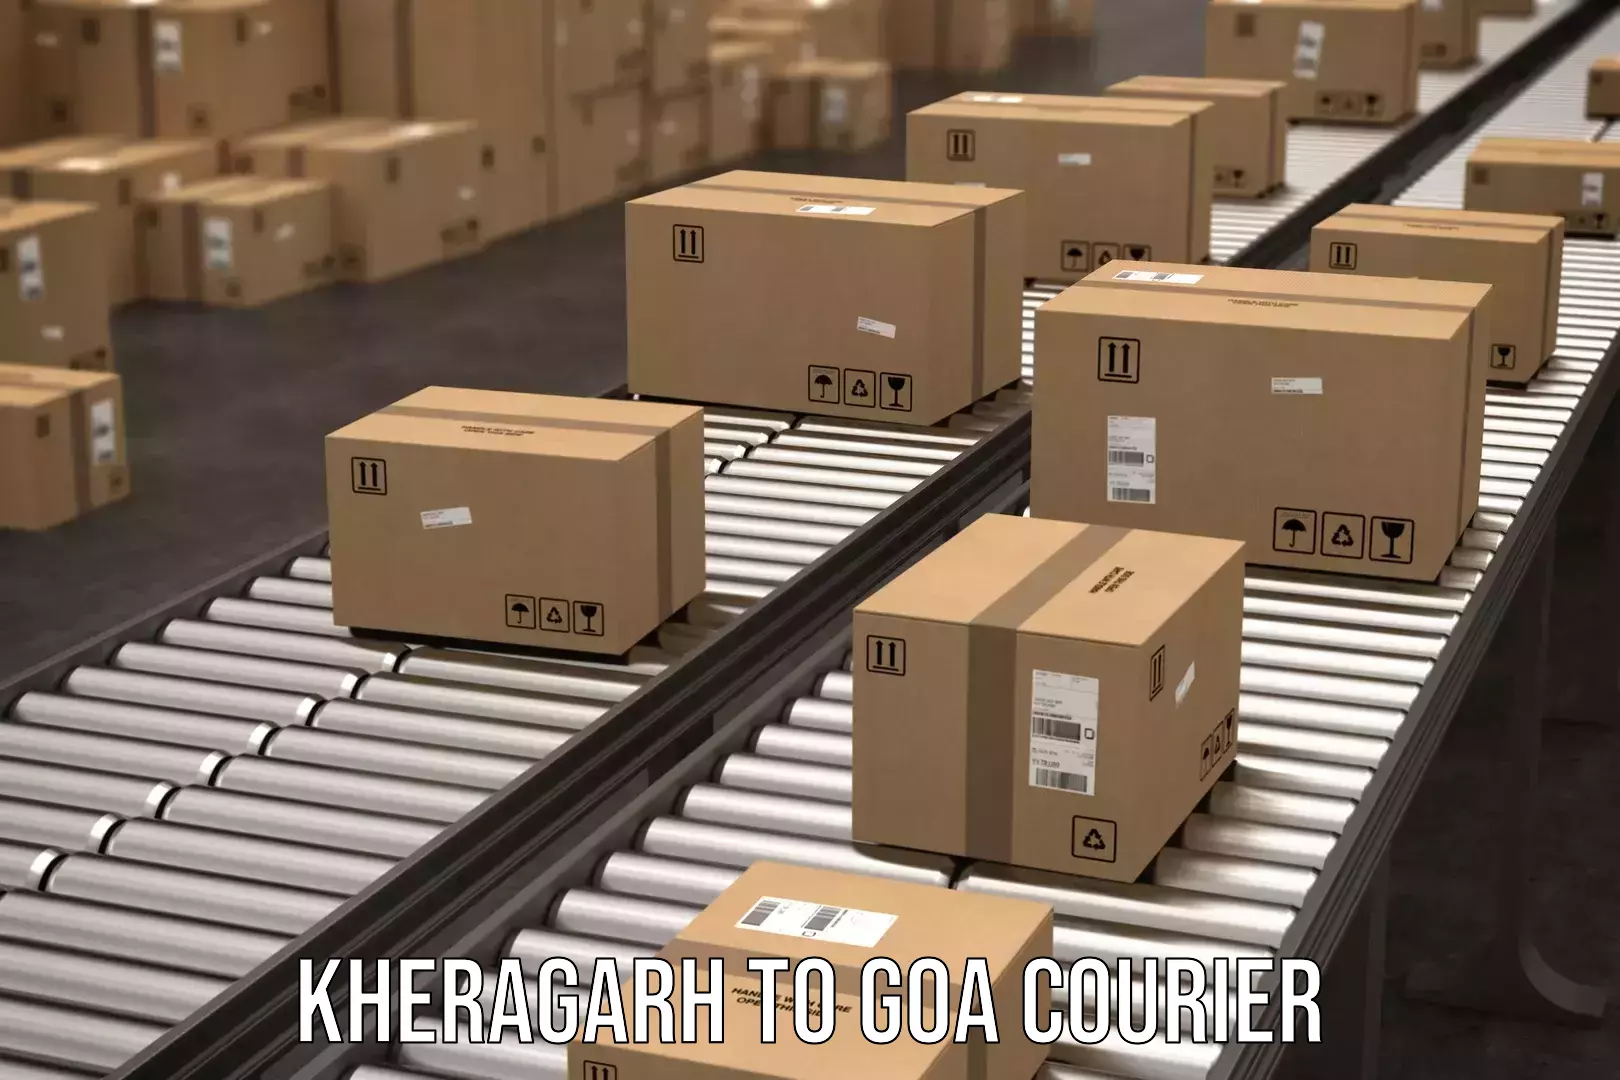 Supply chain efficiency Kheragarh to Goa